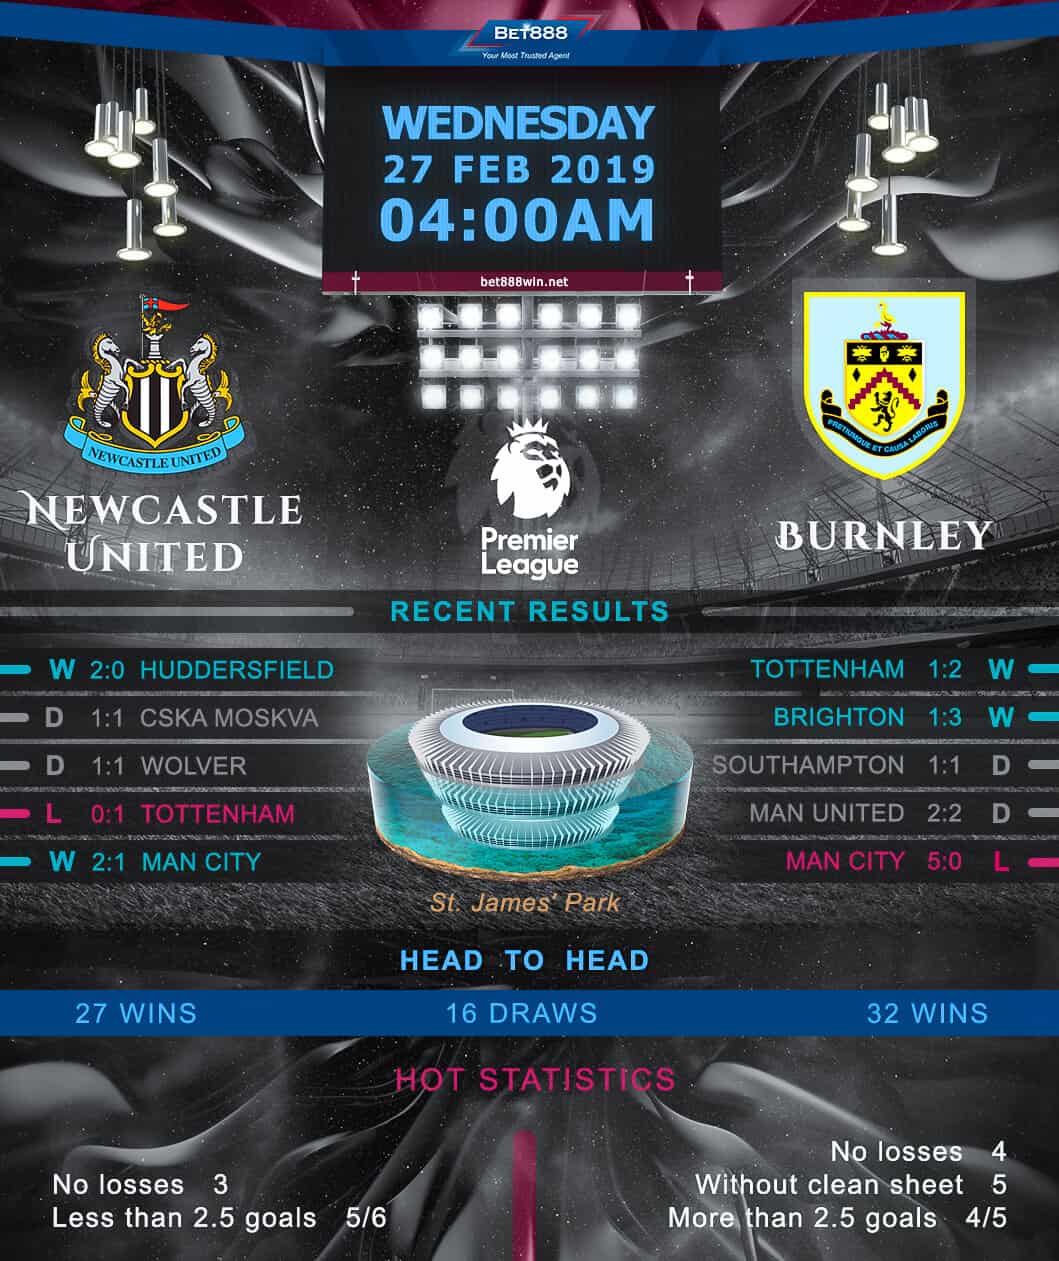 Newcastle United vs Burnley 27/02/19